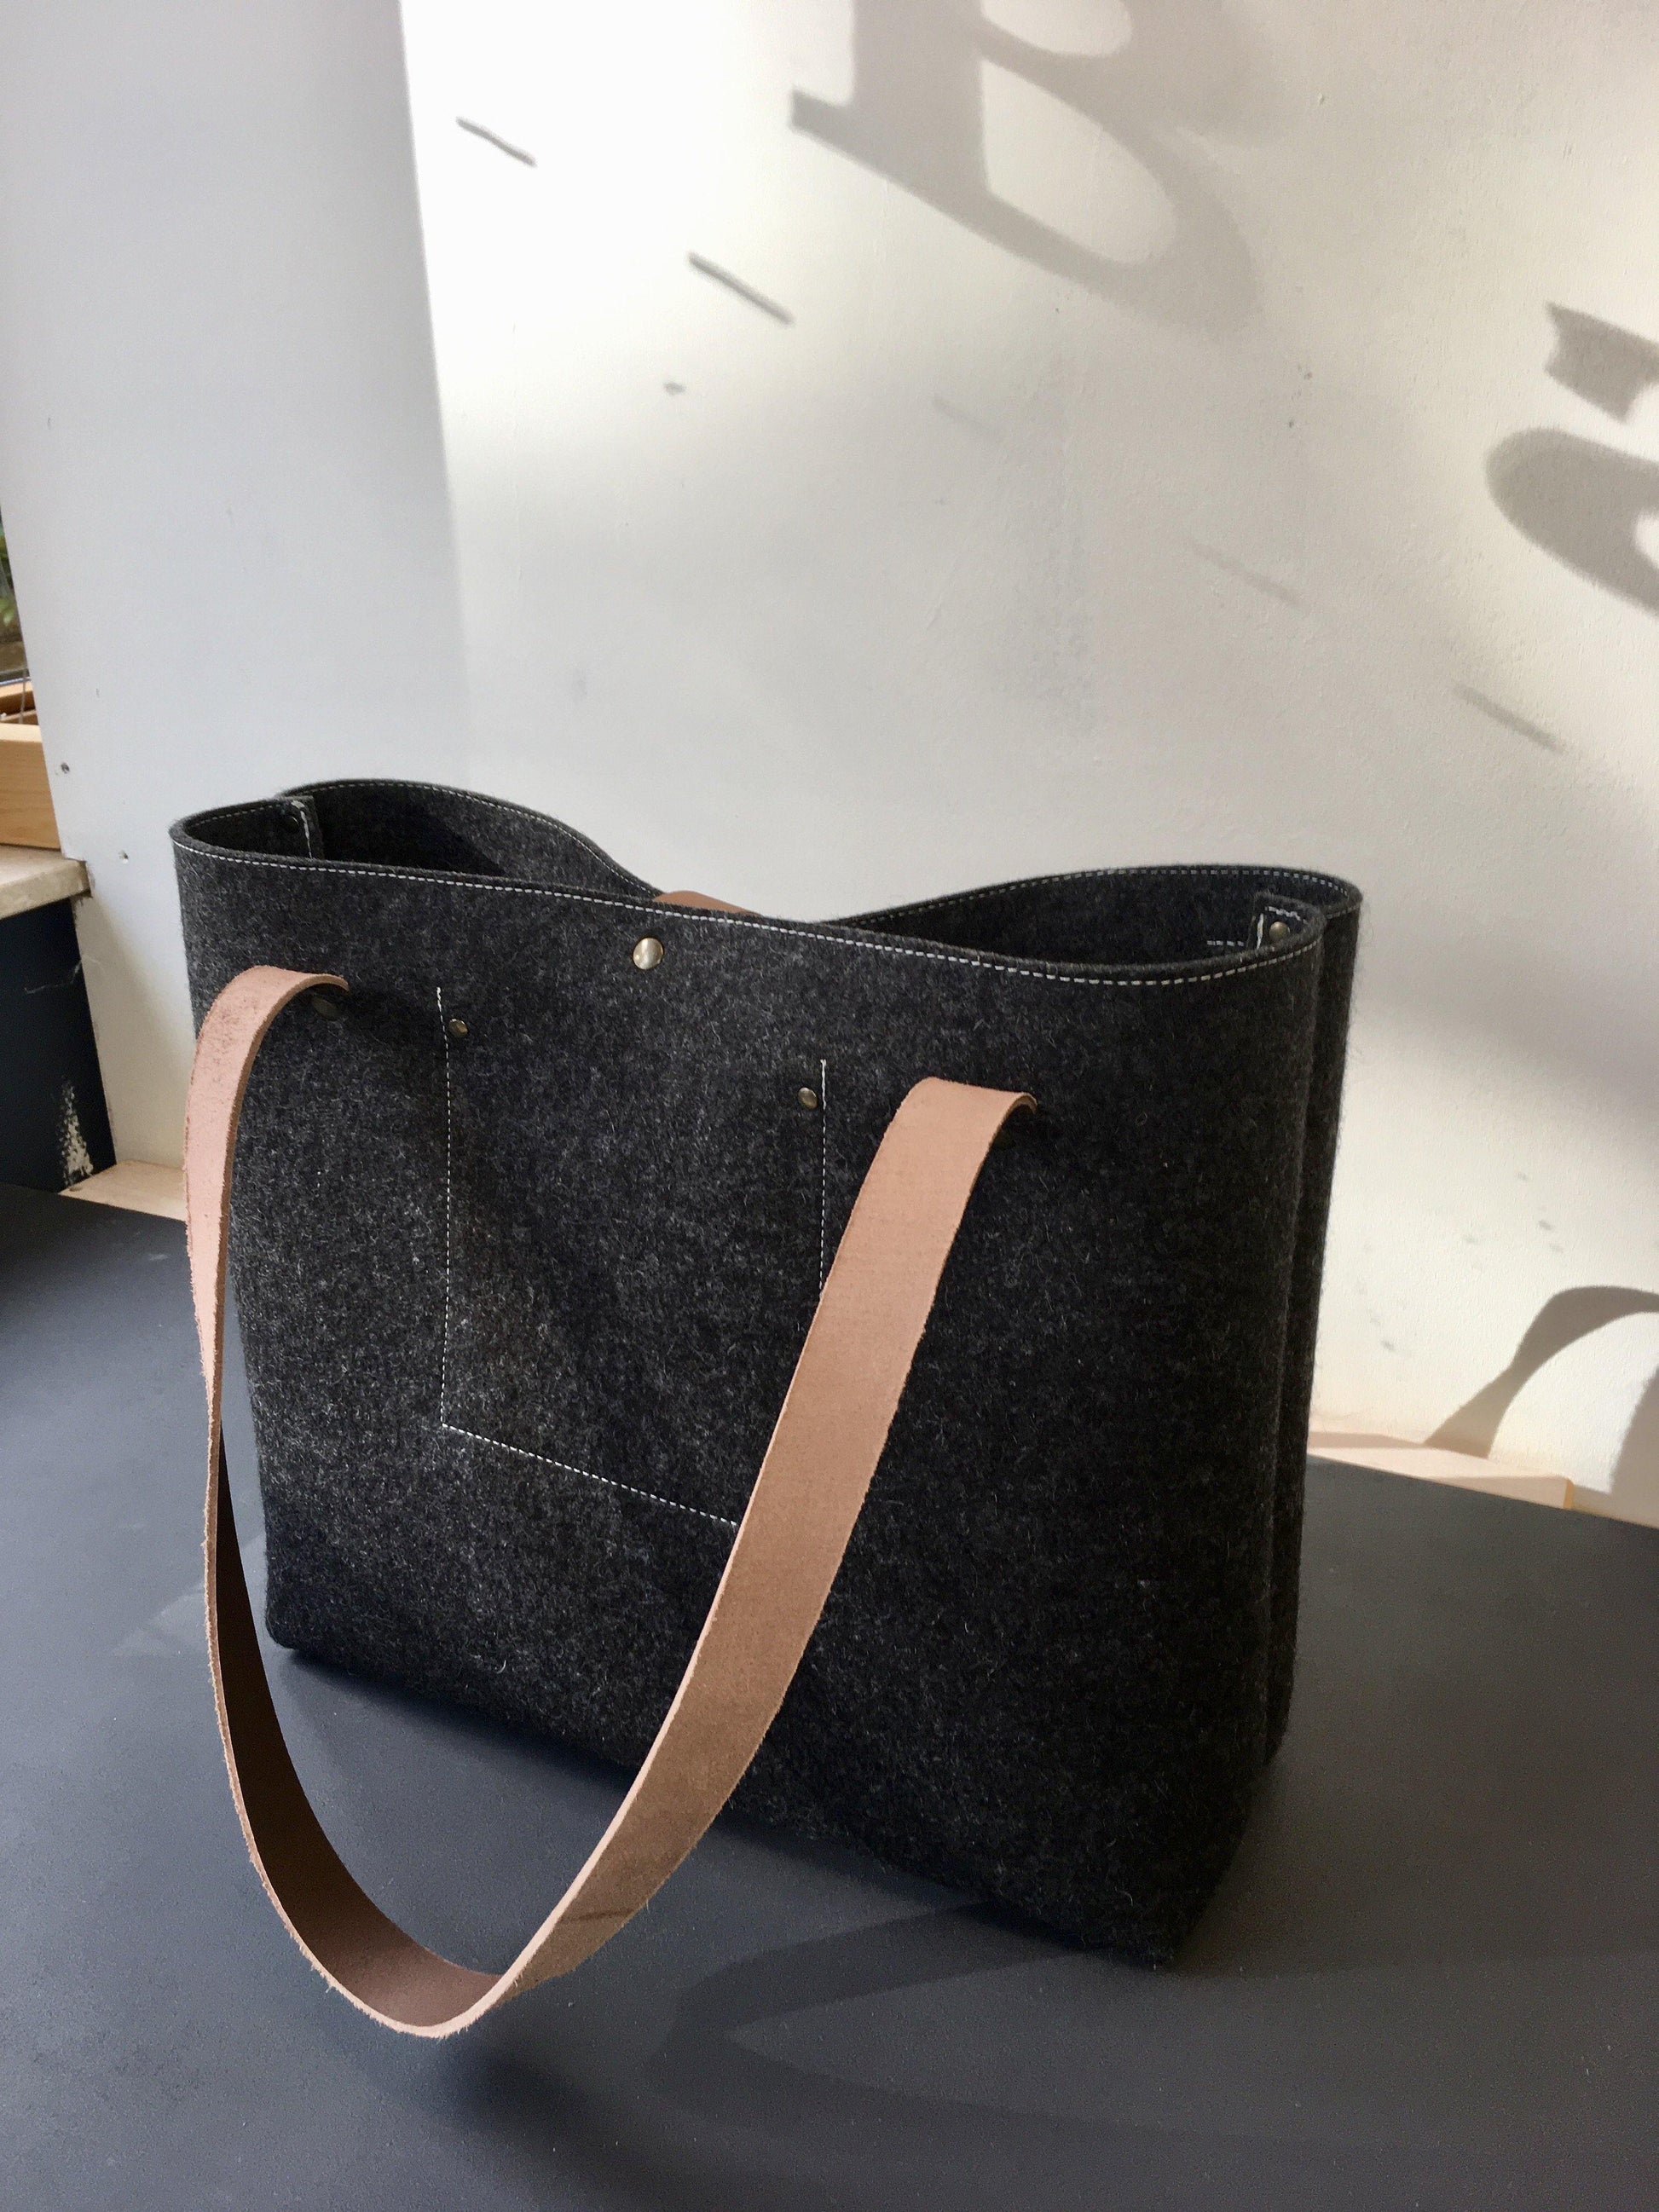 Westerman bags - minimalistisch design van pure wol vilt